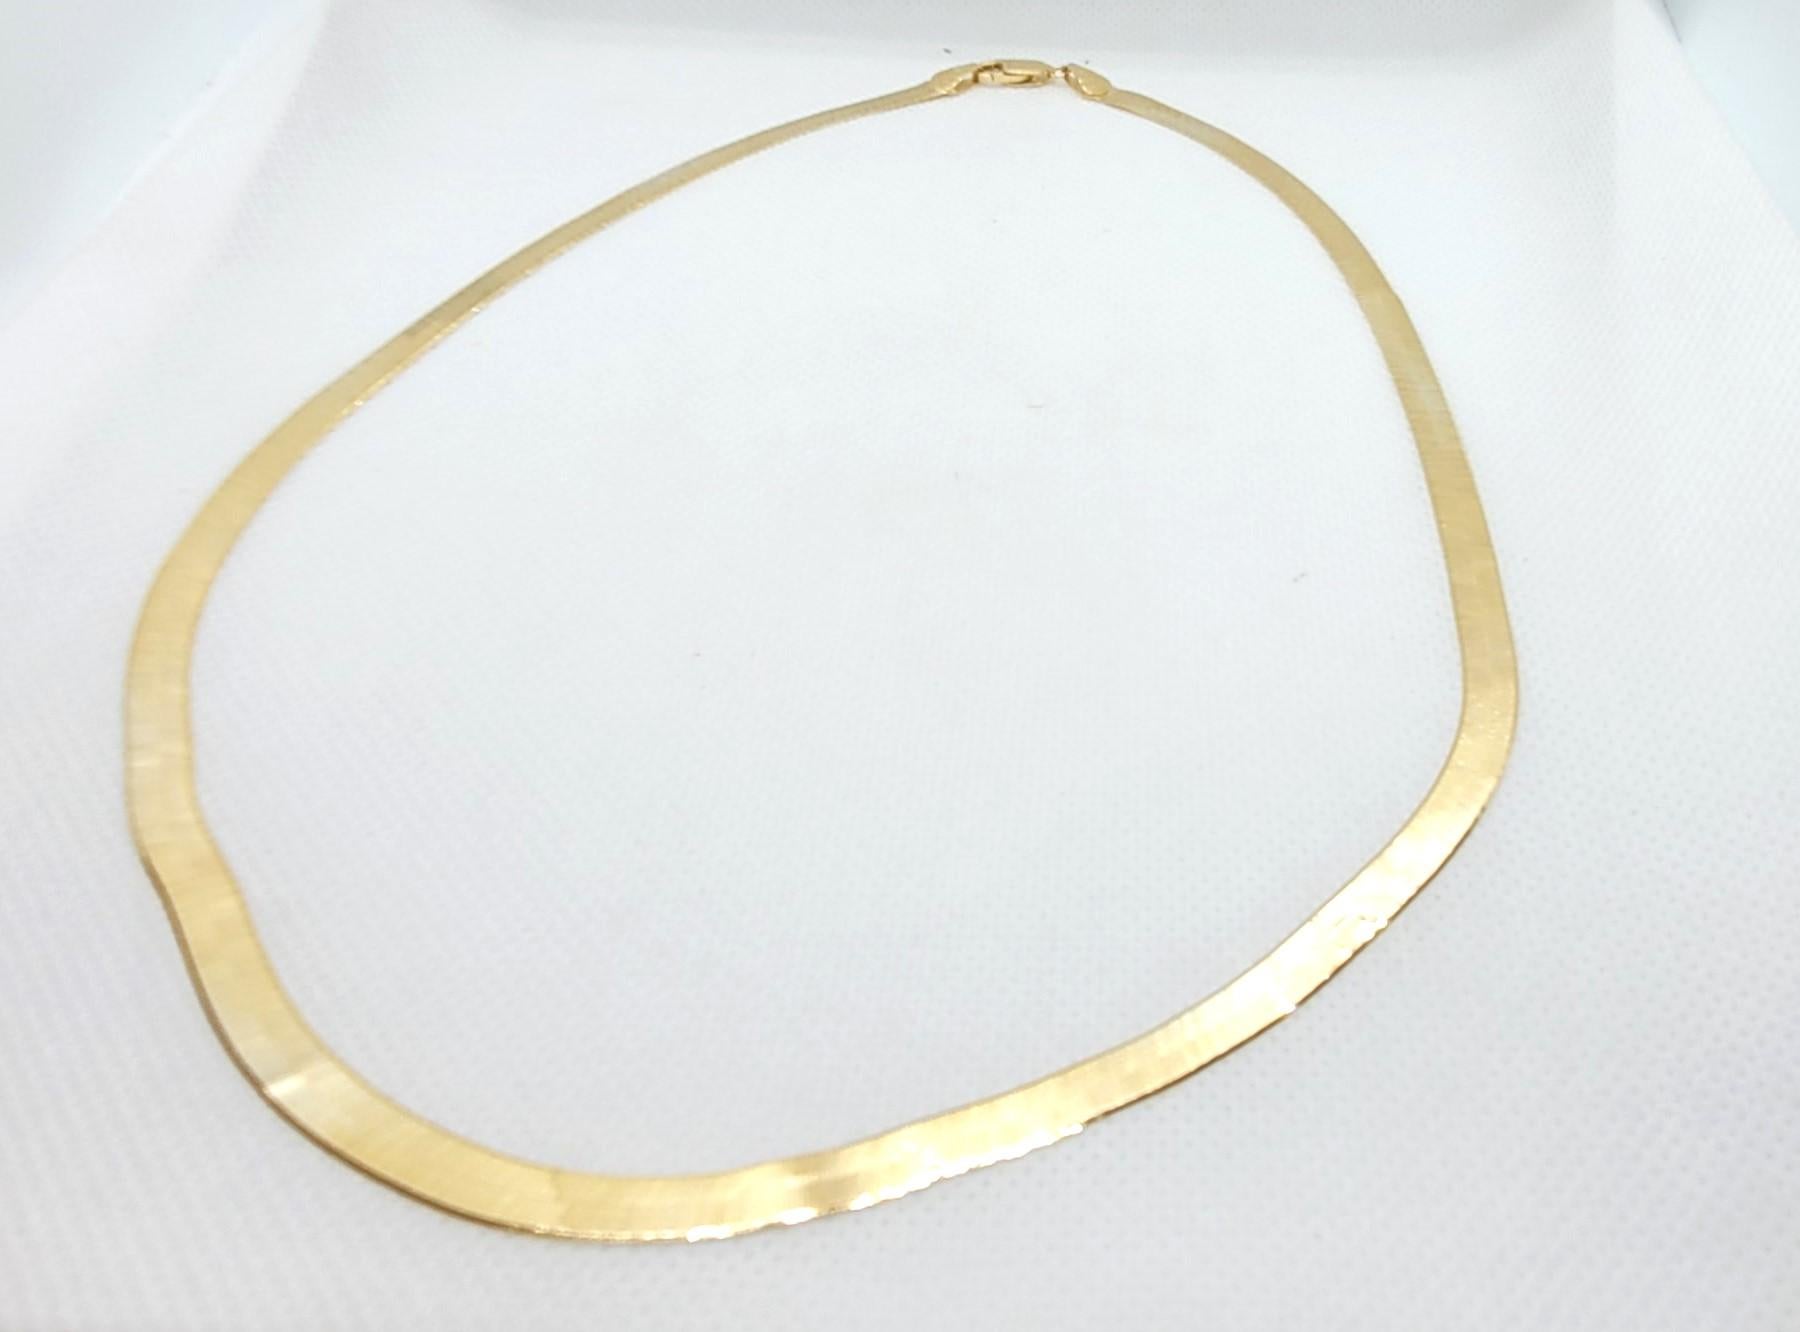 20 inch gold herringbone necklace